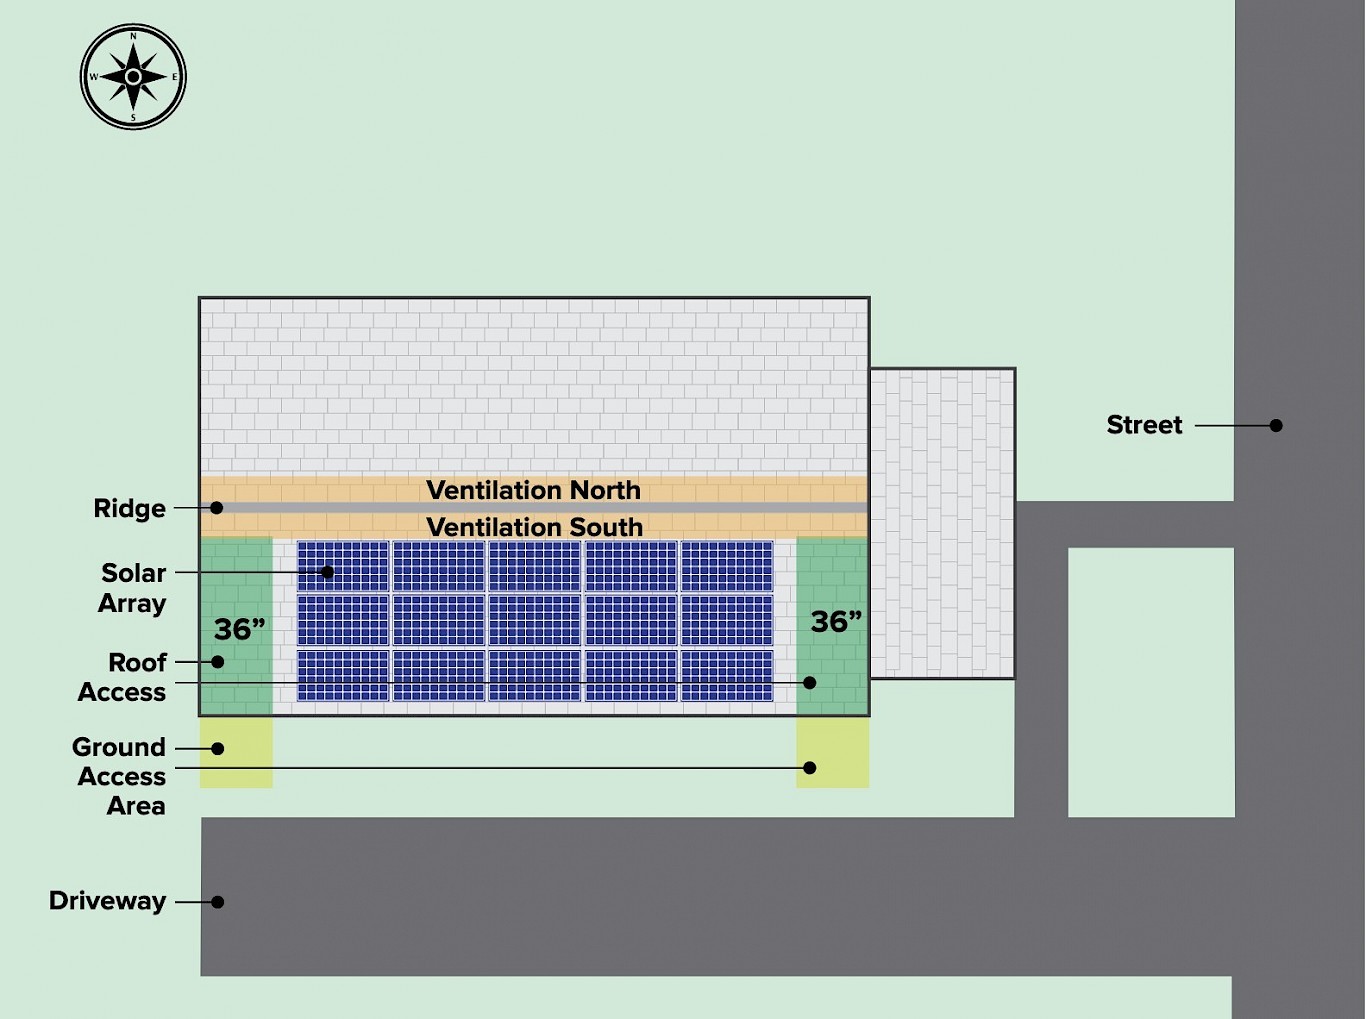 nyserda-completes-staten-island-3-1-megawatt-solar-array-target-solar